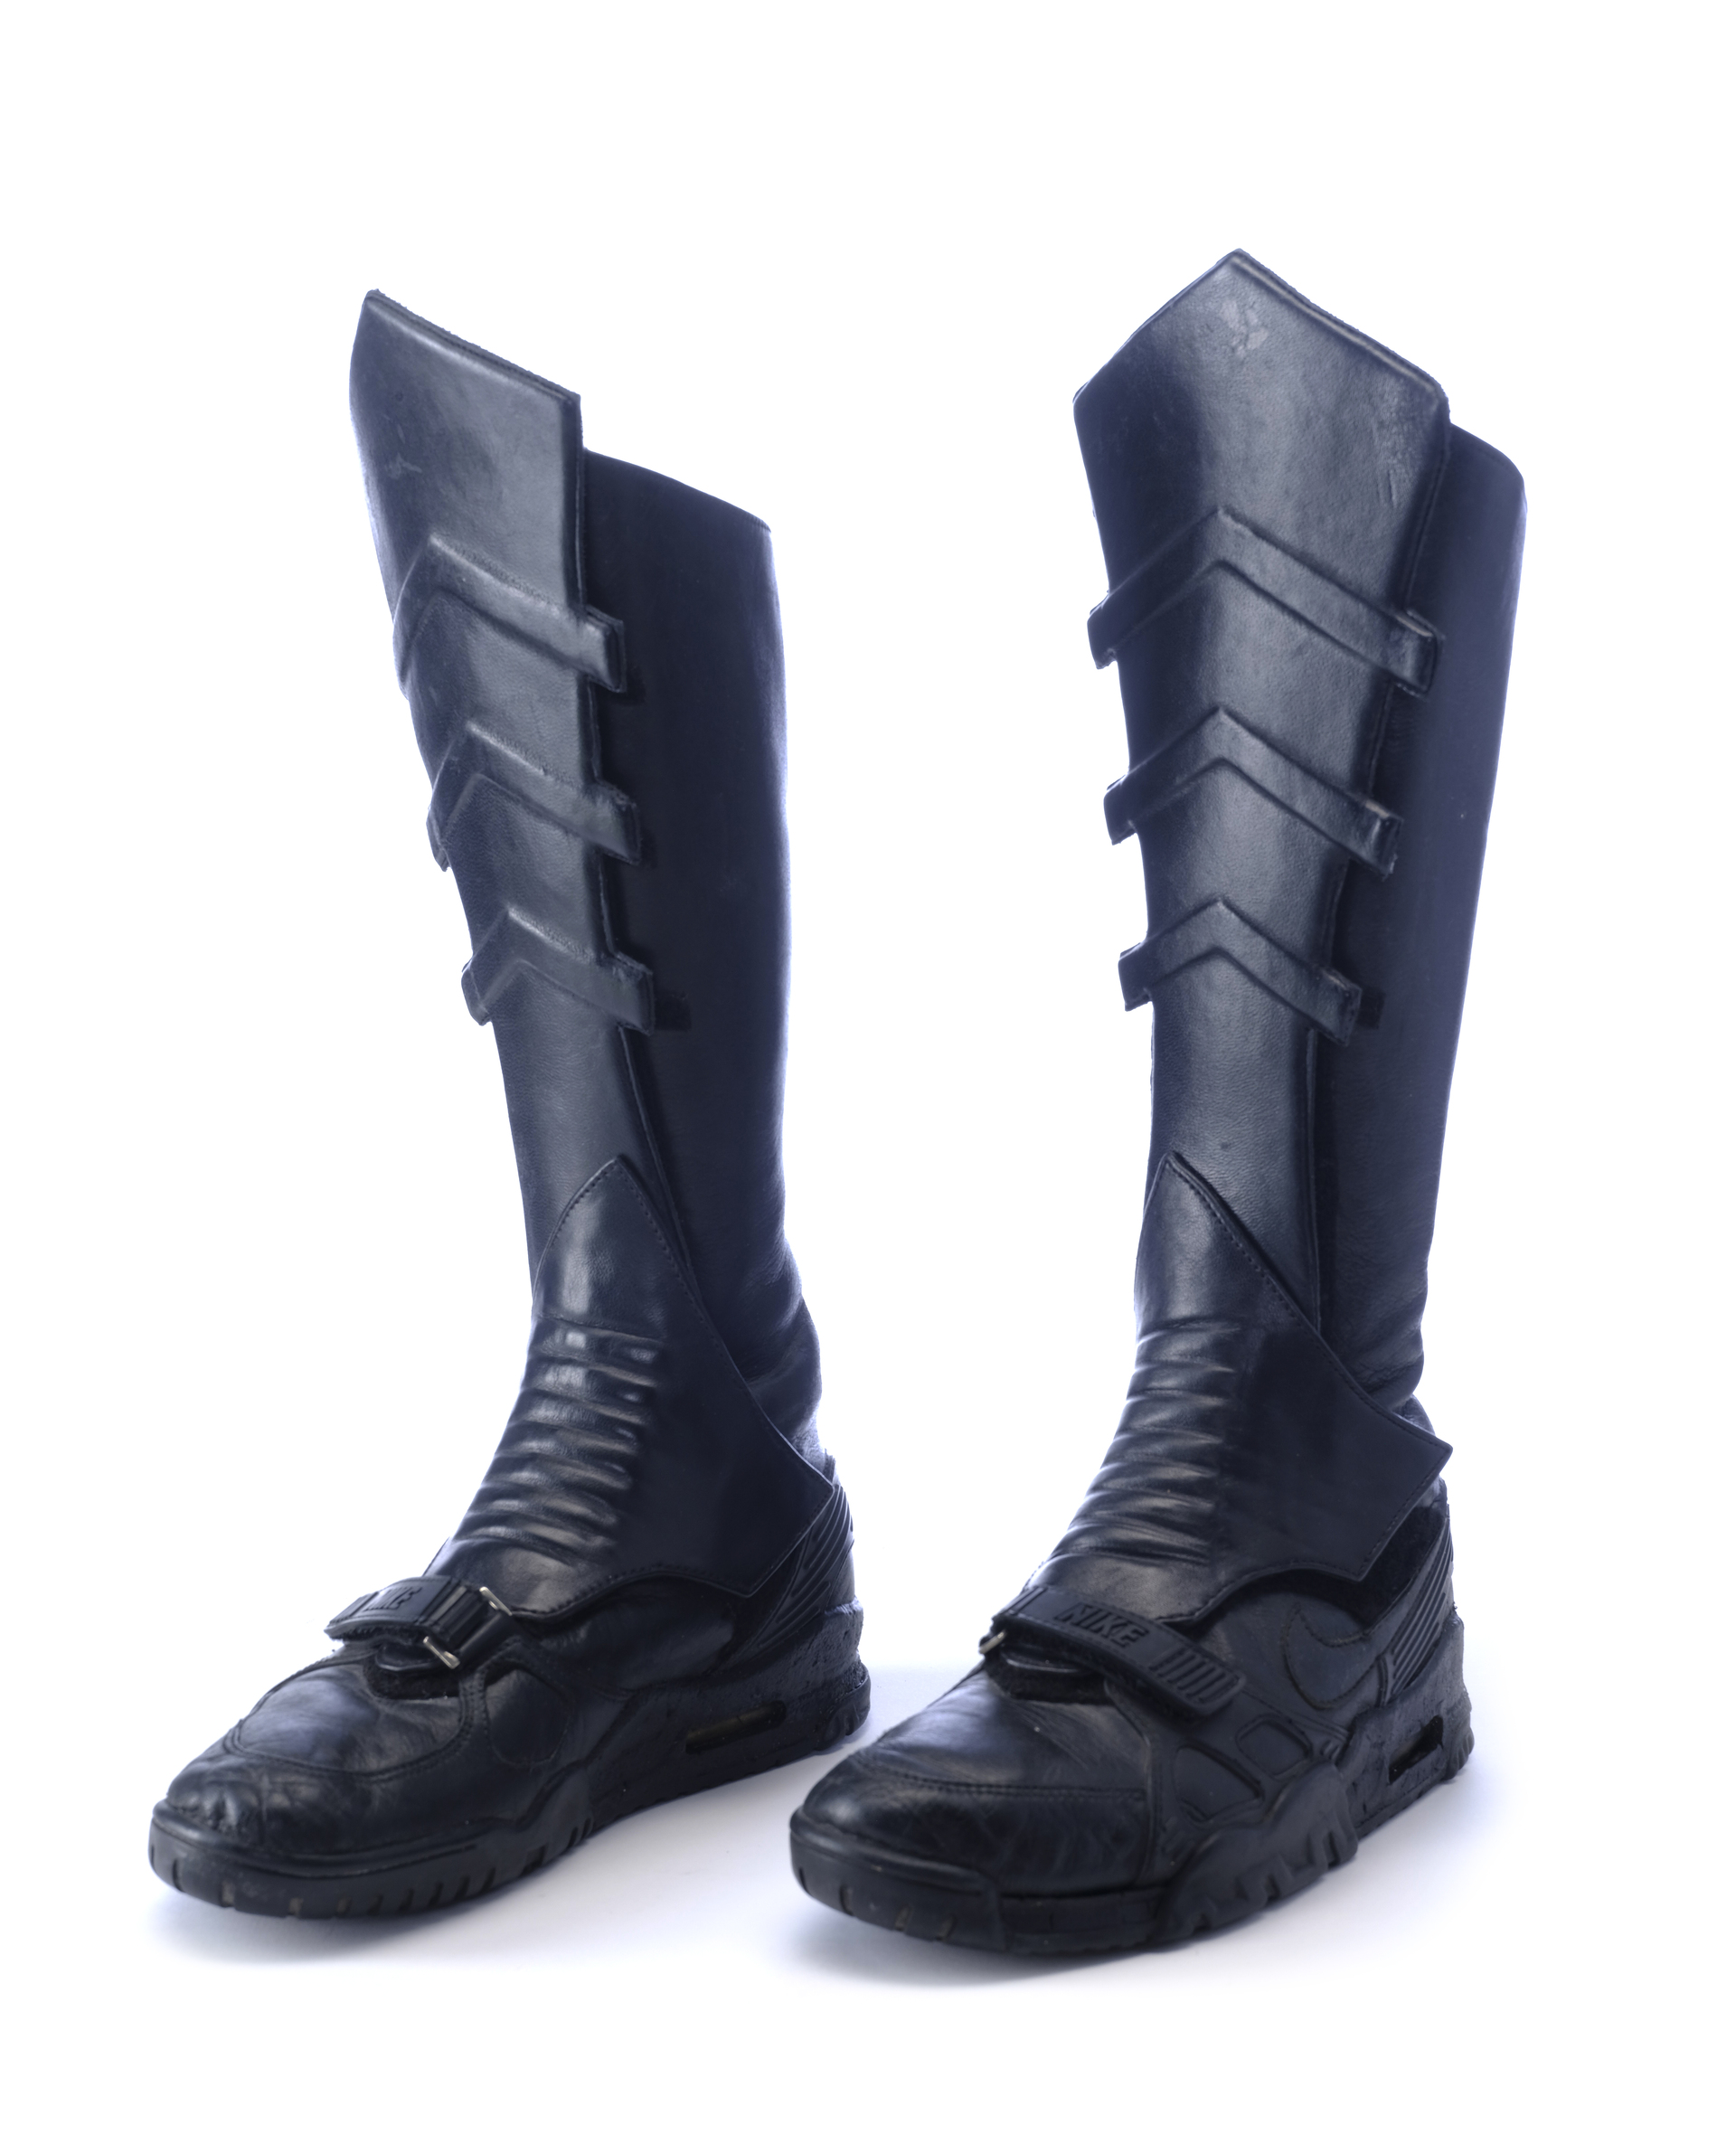 BATMAN - Batman's (Michael Keaton) Nike-Made Bat Boots - Image 3 of 8